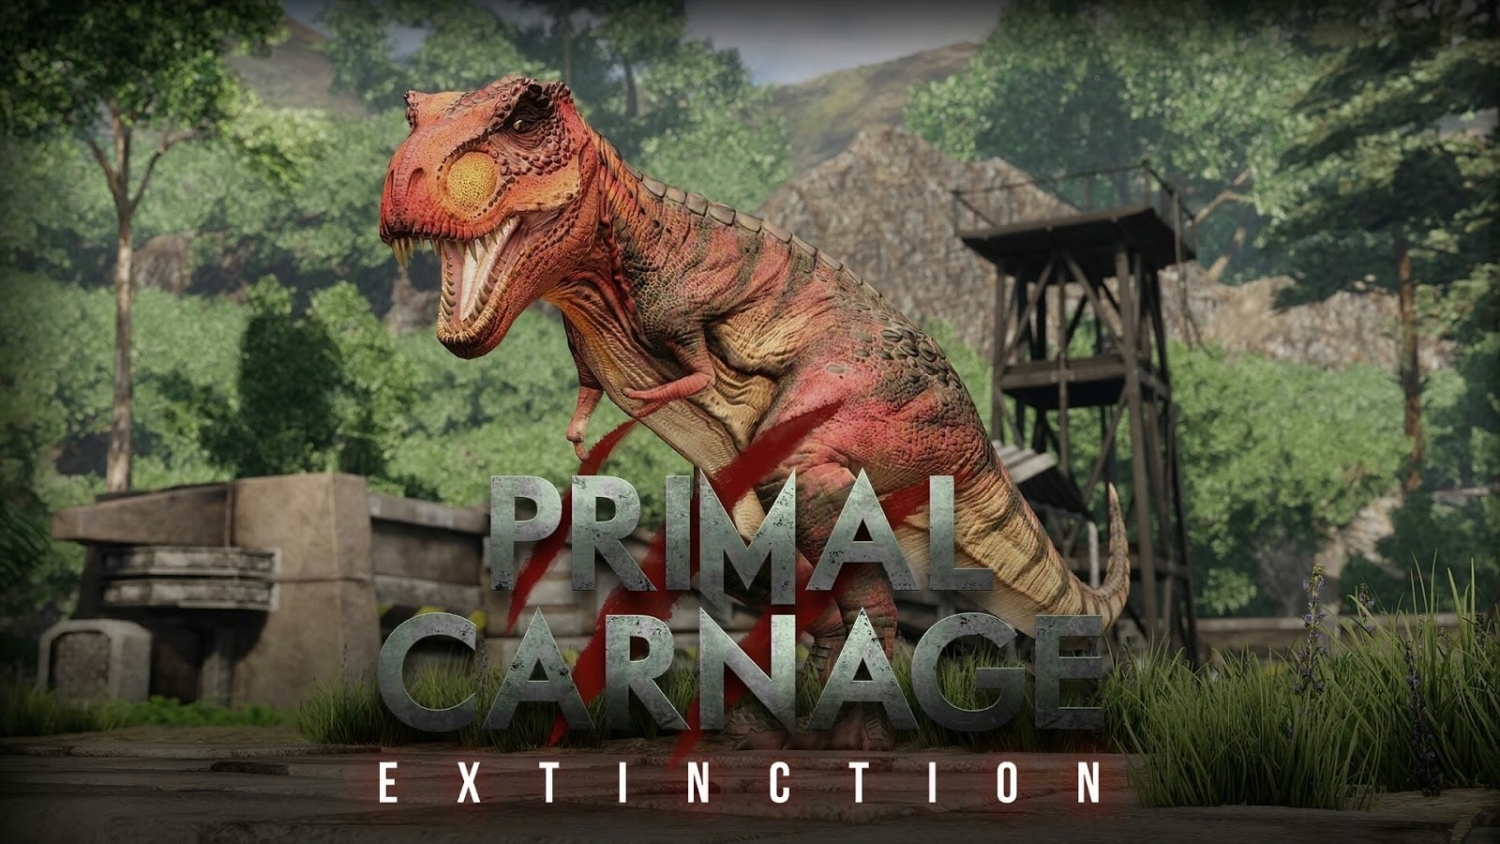 Is Primal Carnage: Extinction, Worth Playing?